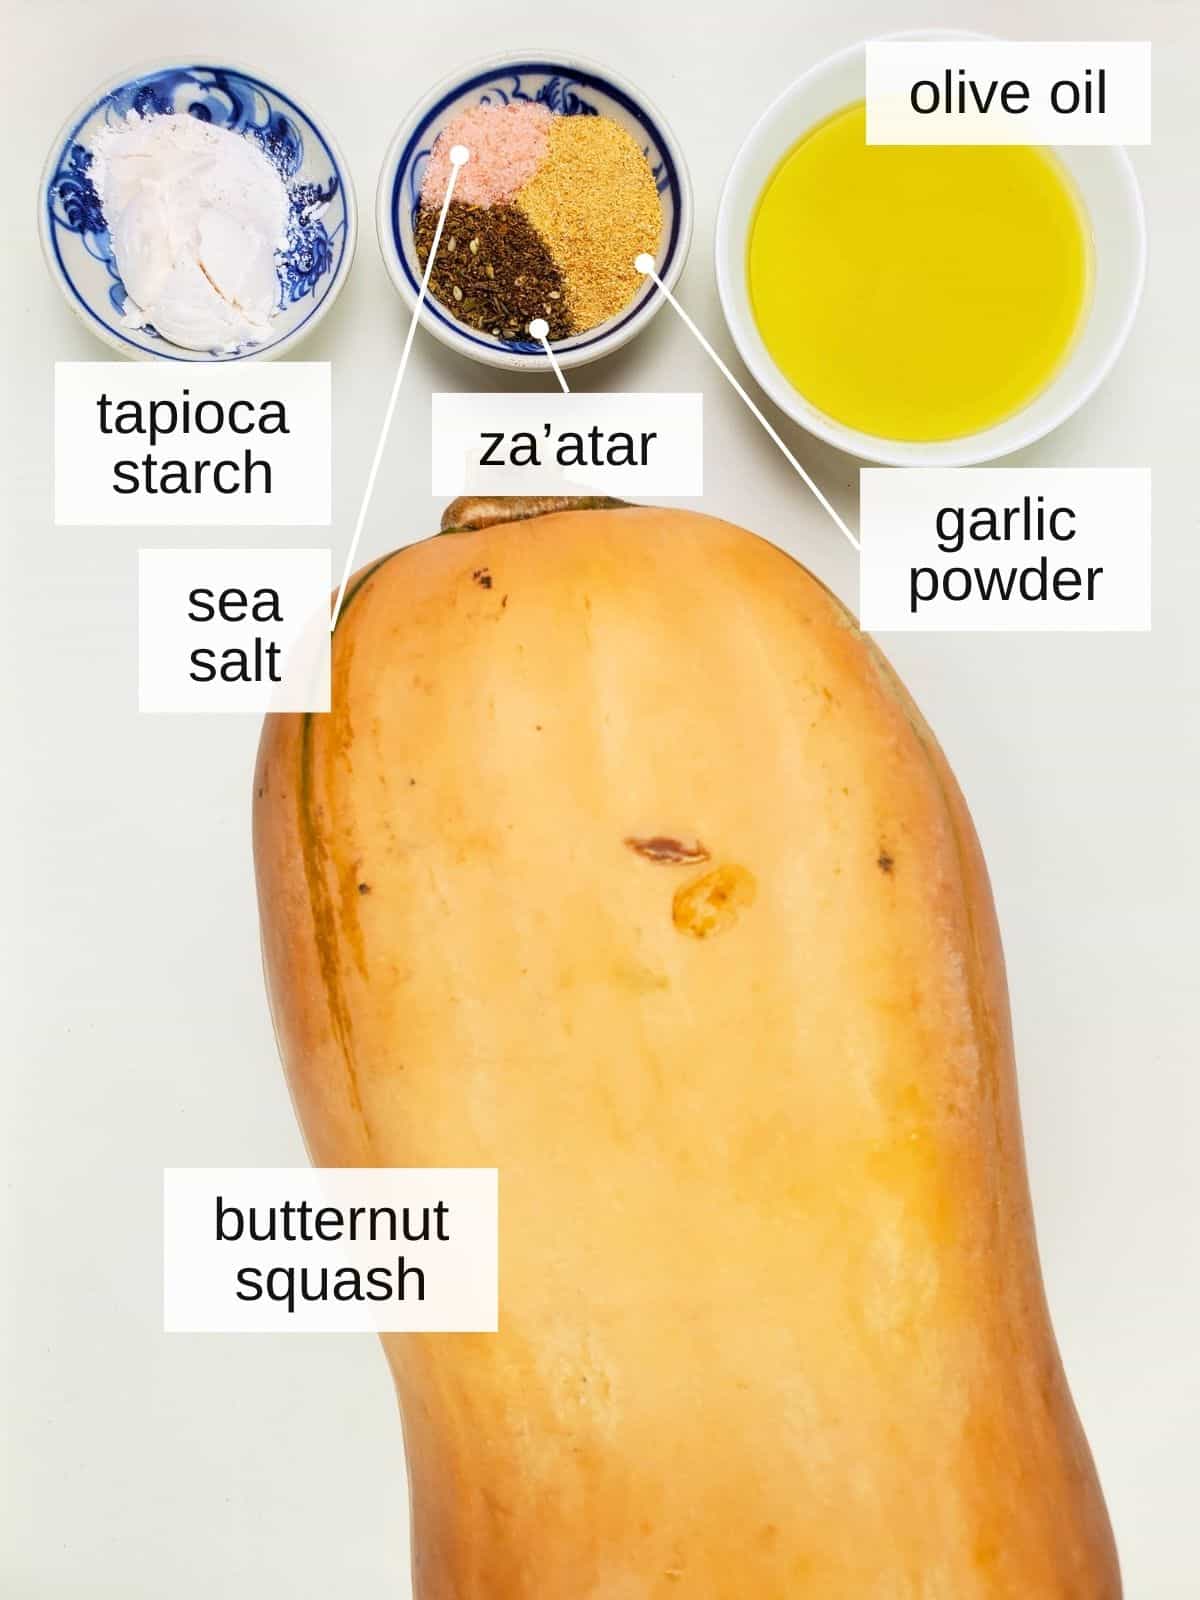 ingredients for butternut squash fries in air fryer, including tapioca starch, sea salt, za'atar, olive oil, garlic powder, and butternut squash.